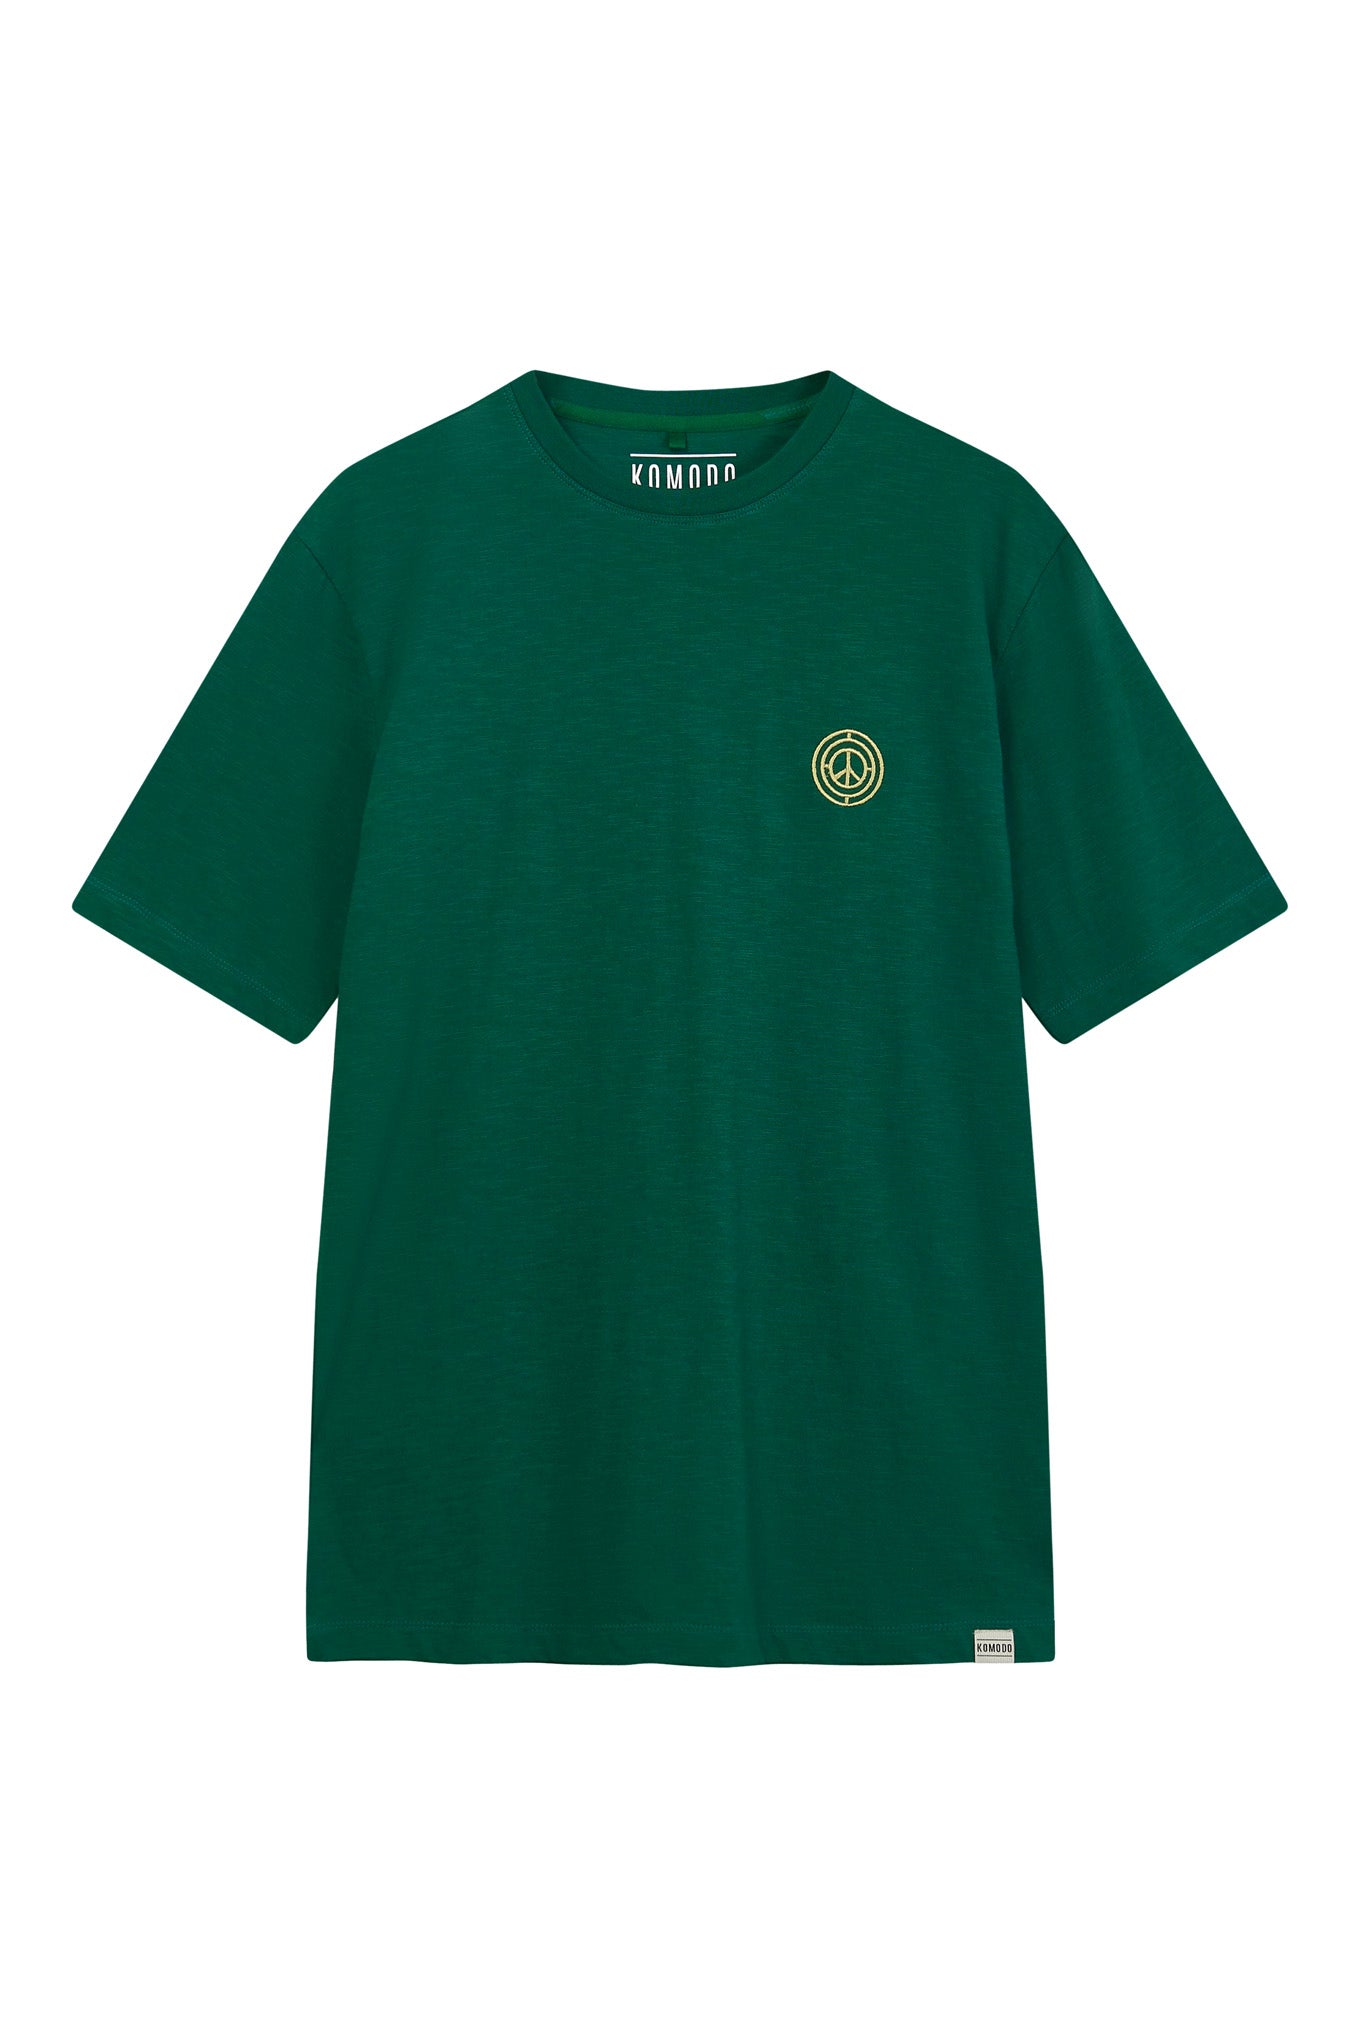 Dark green T-shirt KIN made of organic cotton from Komodo